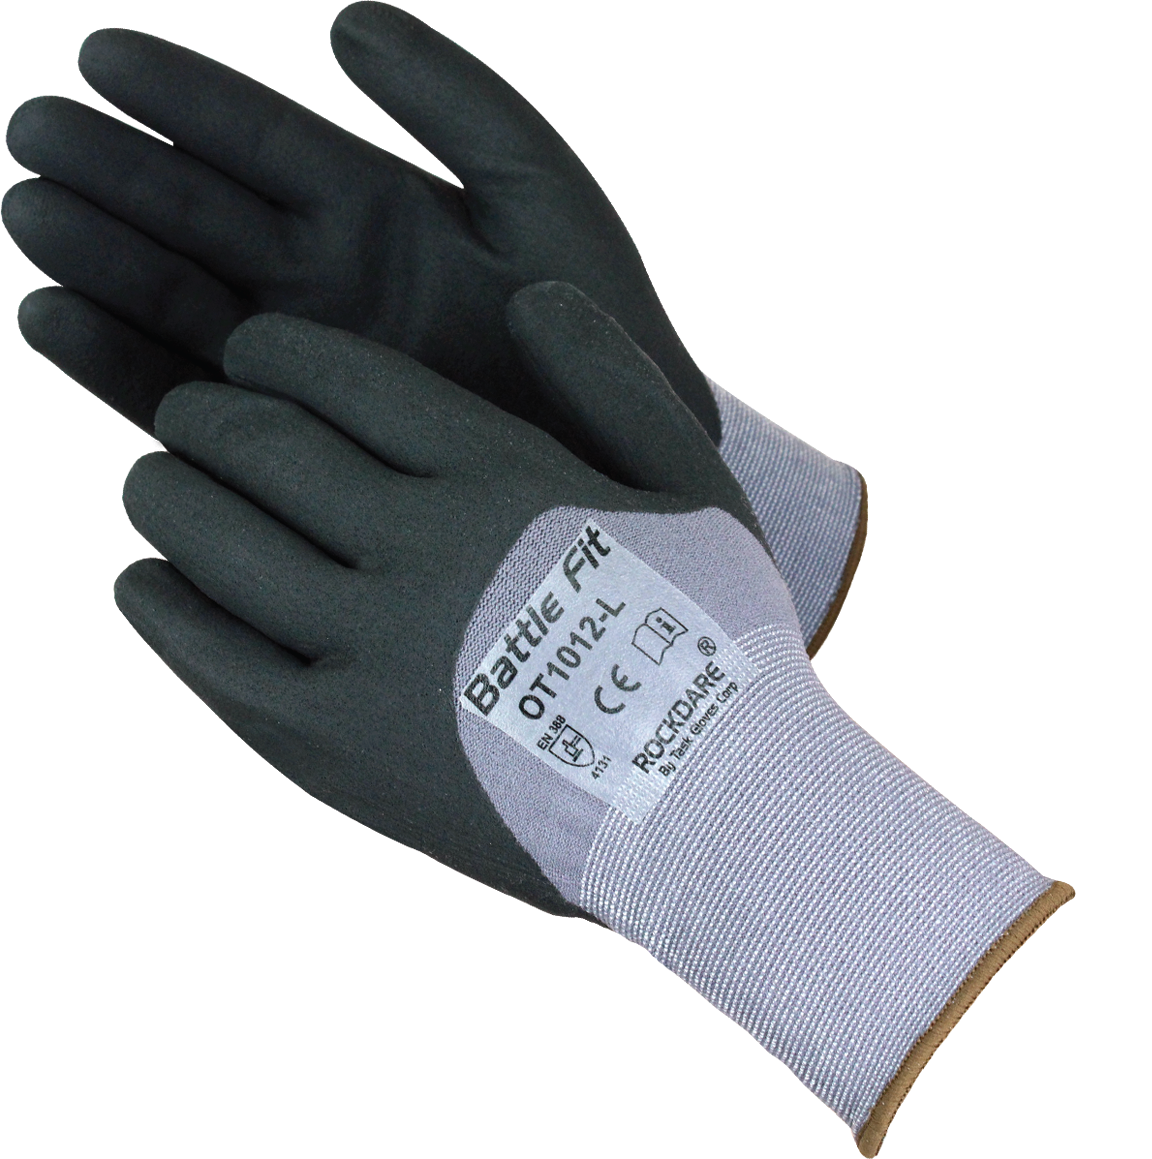 Task Gloves-Black Micro-Foam Nitrile Knuckle coated, 15G Knit Gloves.